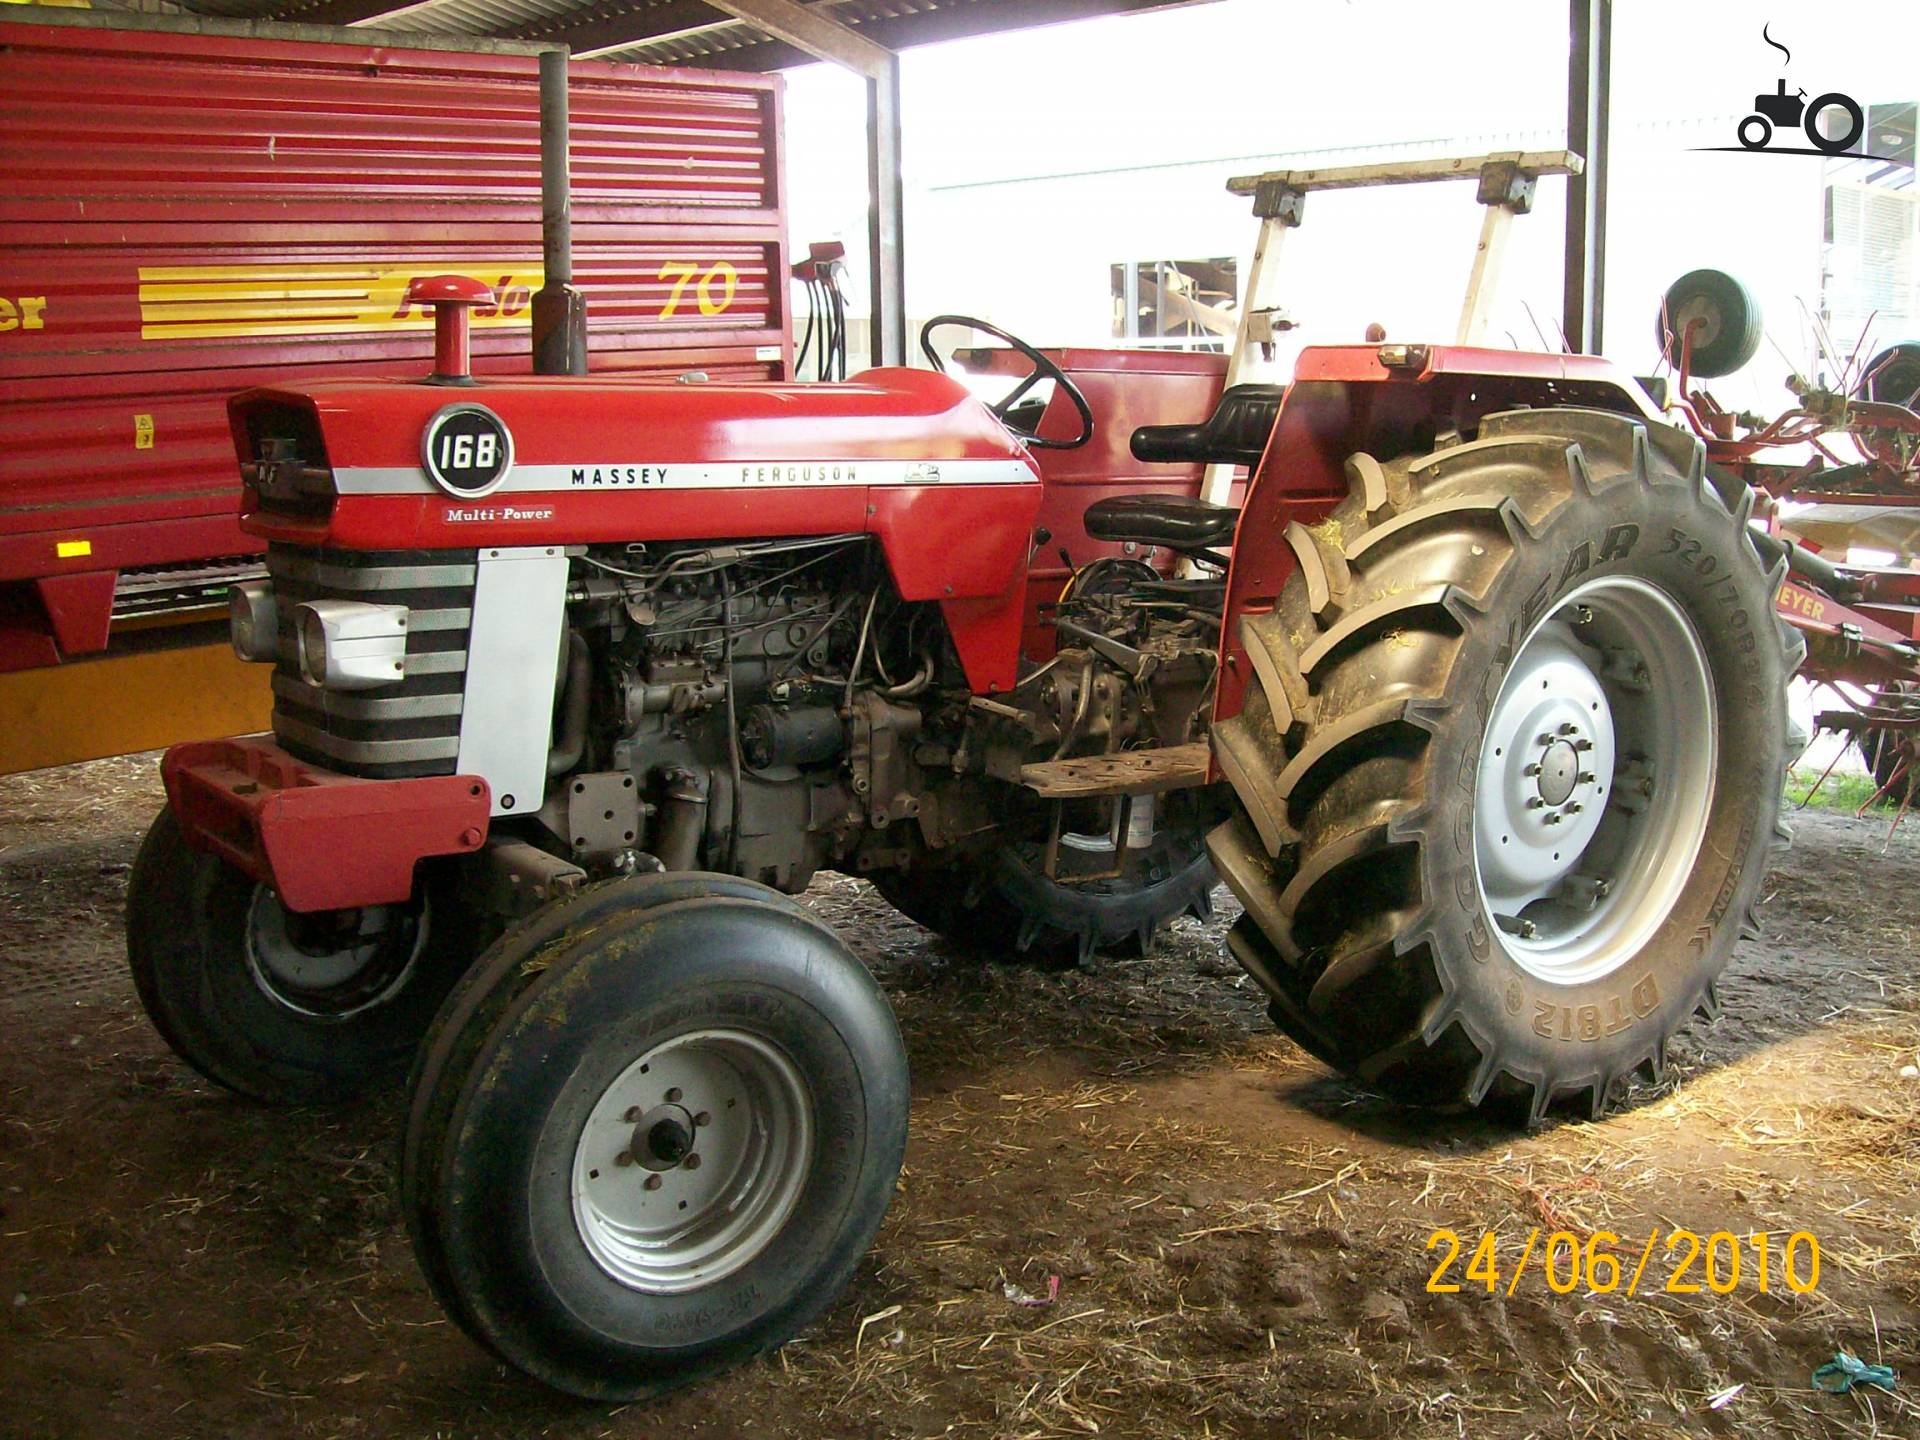 Massey Ferguson 168 for sale | Used Massey Ferguson 168 tractors ...